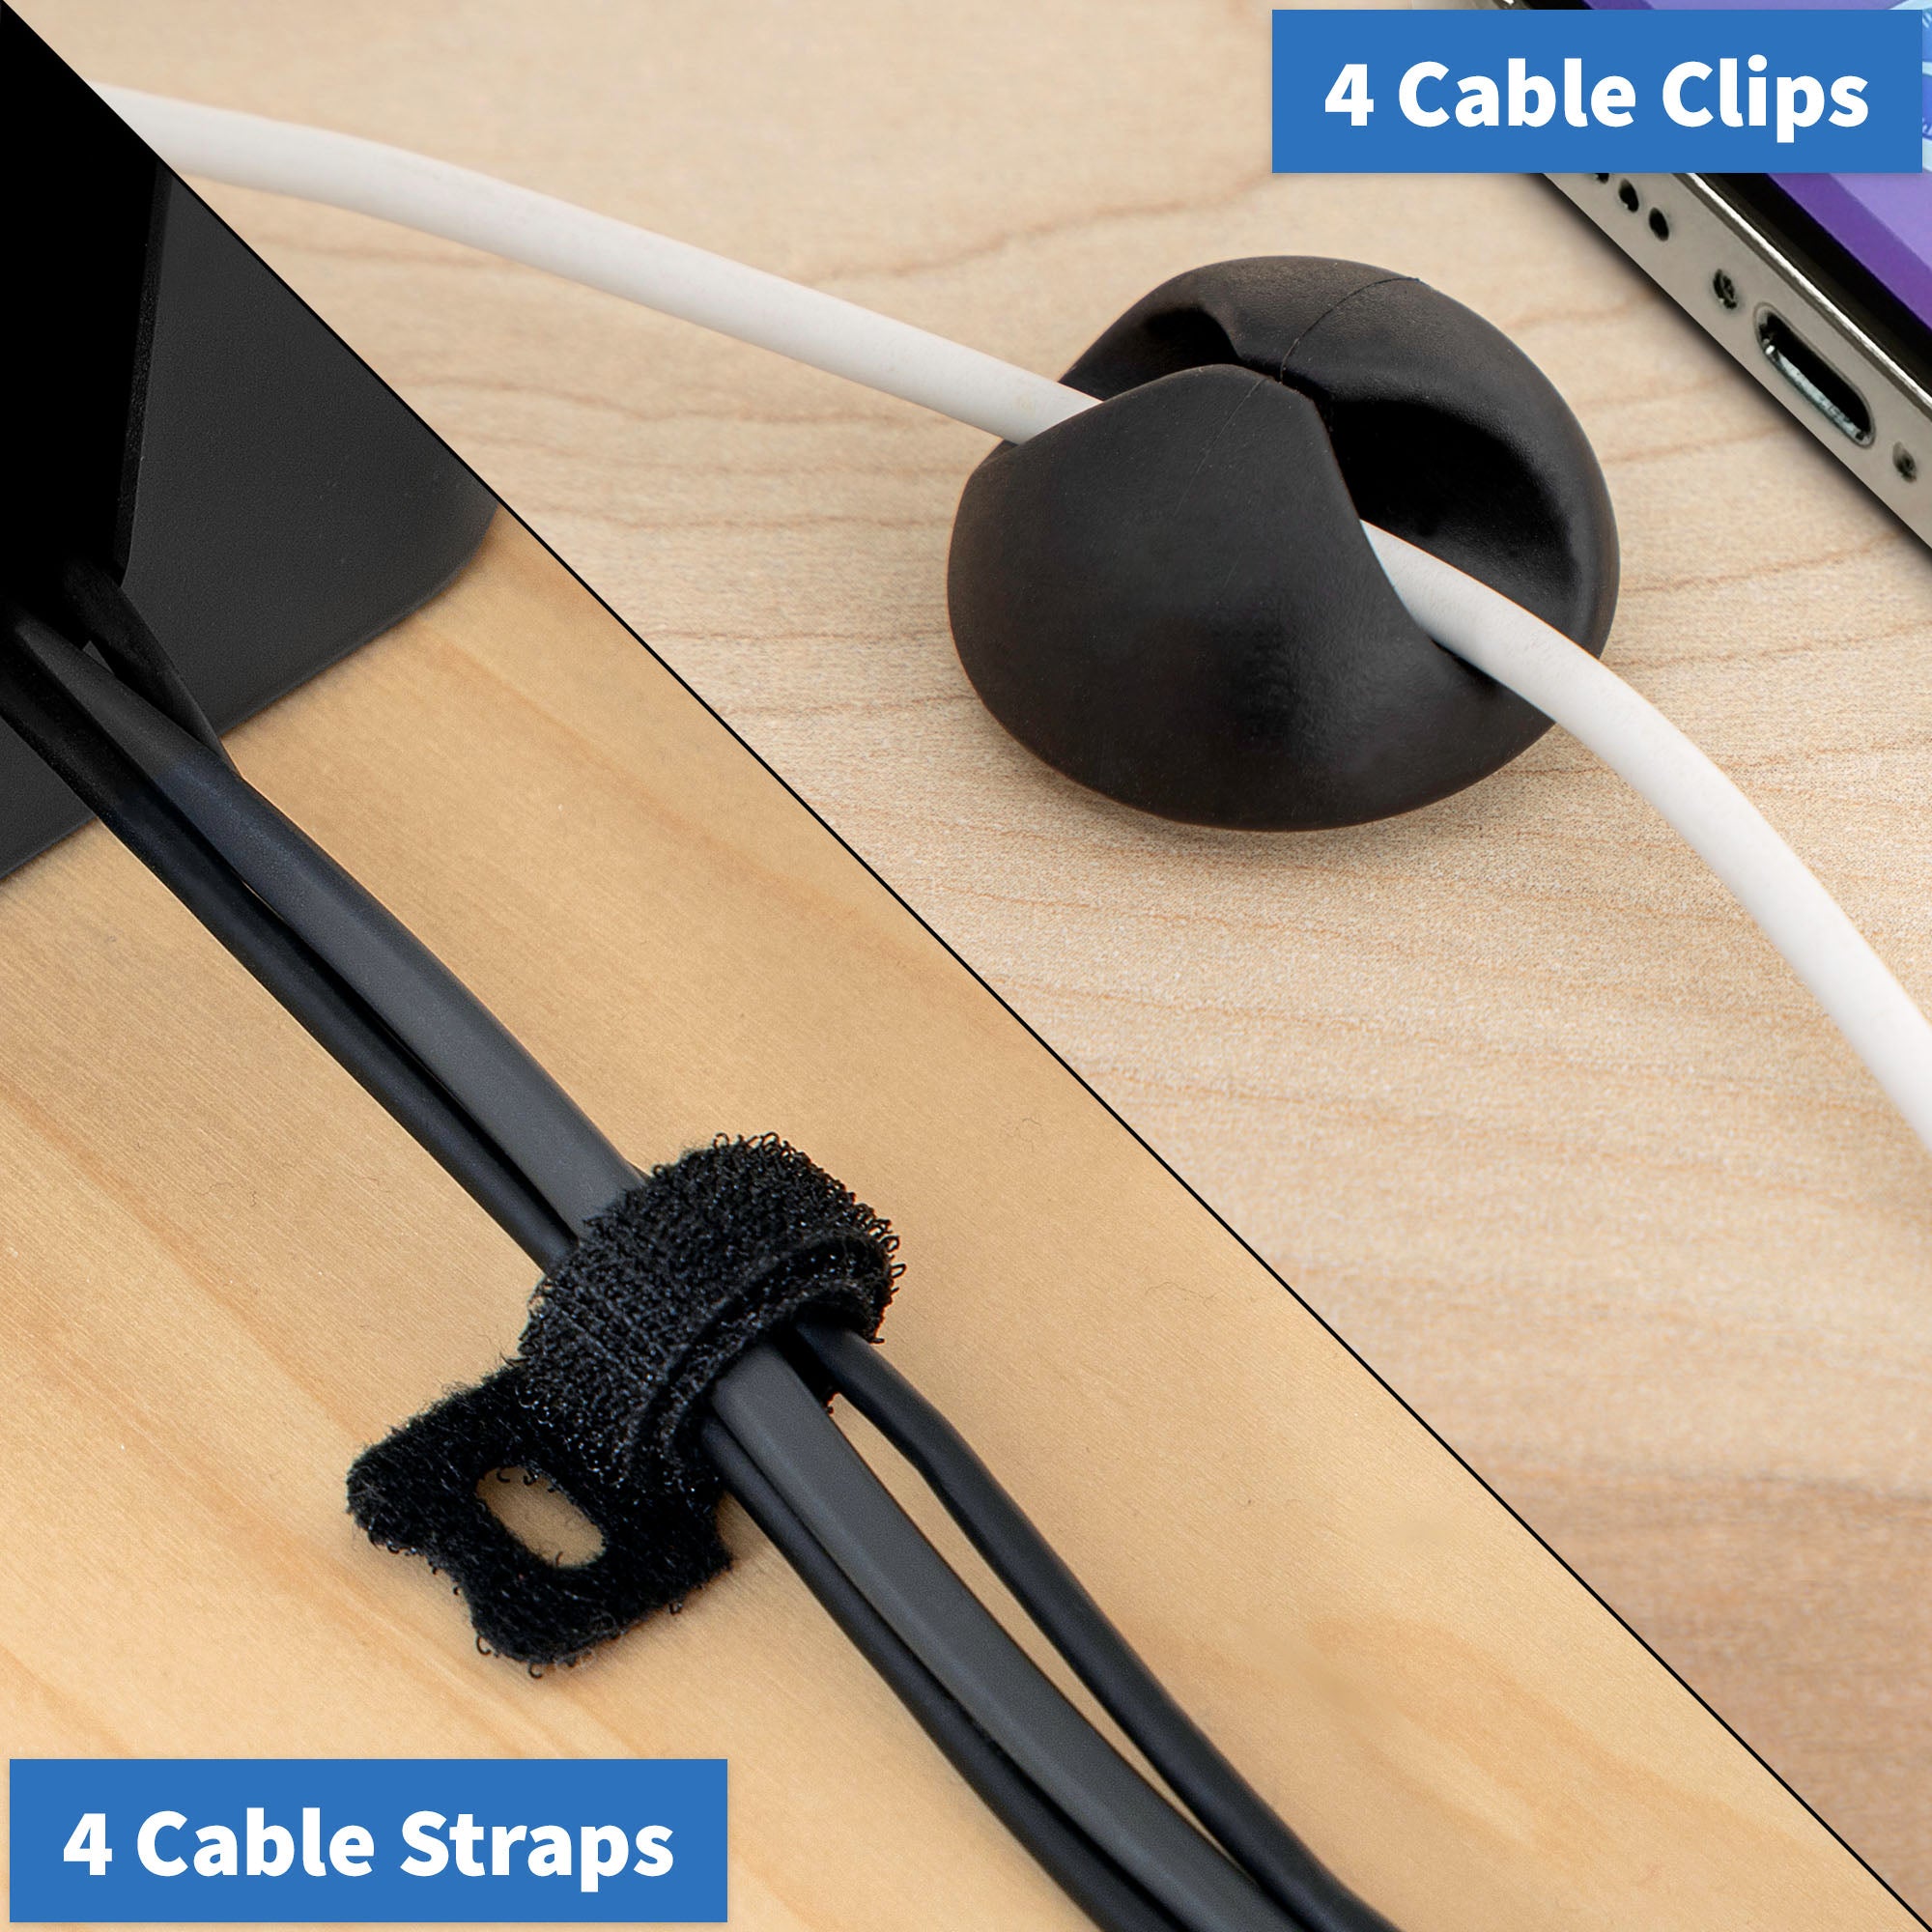 Cable Management Box - Hide Cords Home Organizer Tool, Power Strip Cov –  Blue Key World